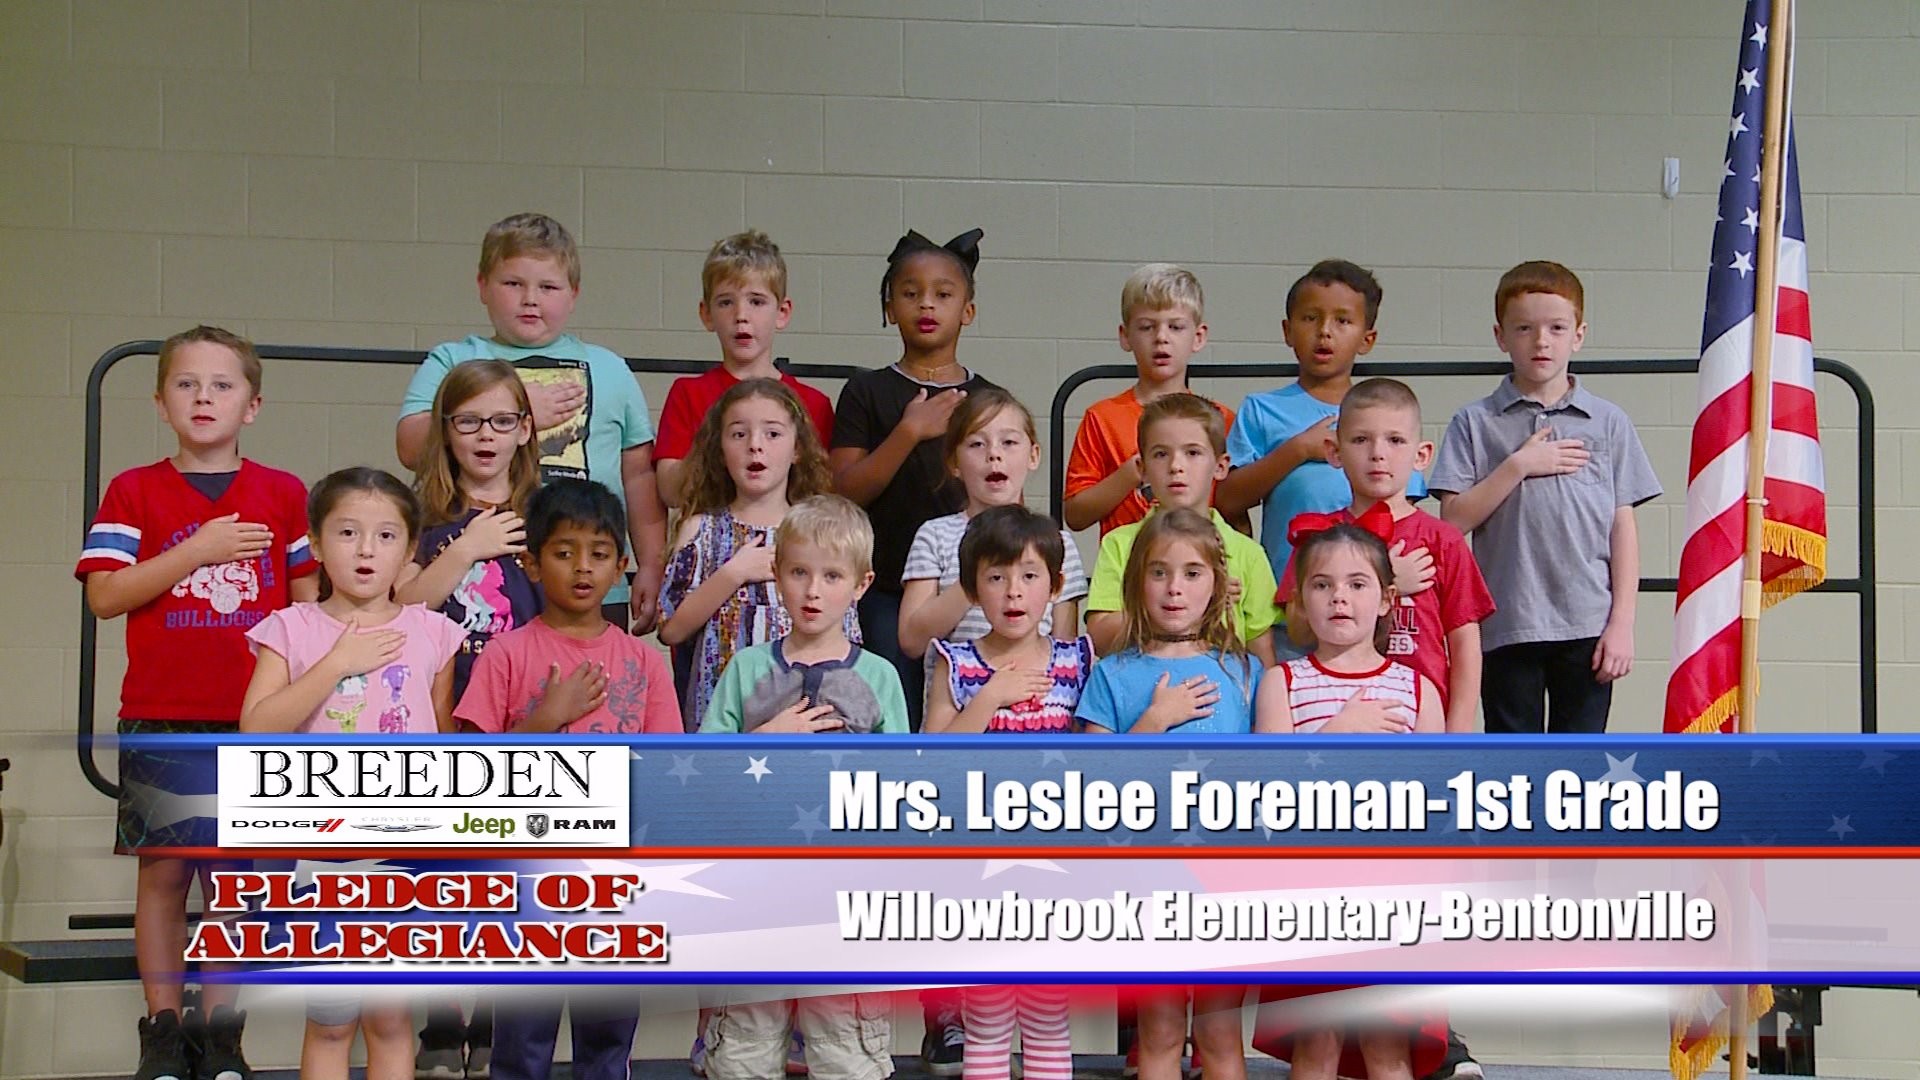 Mrs. Leslee Foreman -1st Grade Willowbrook Elementary, Bentonville